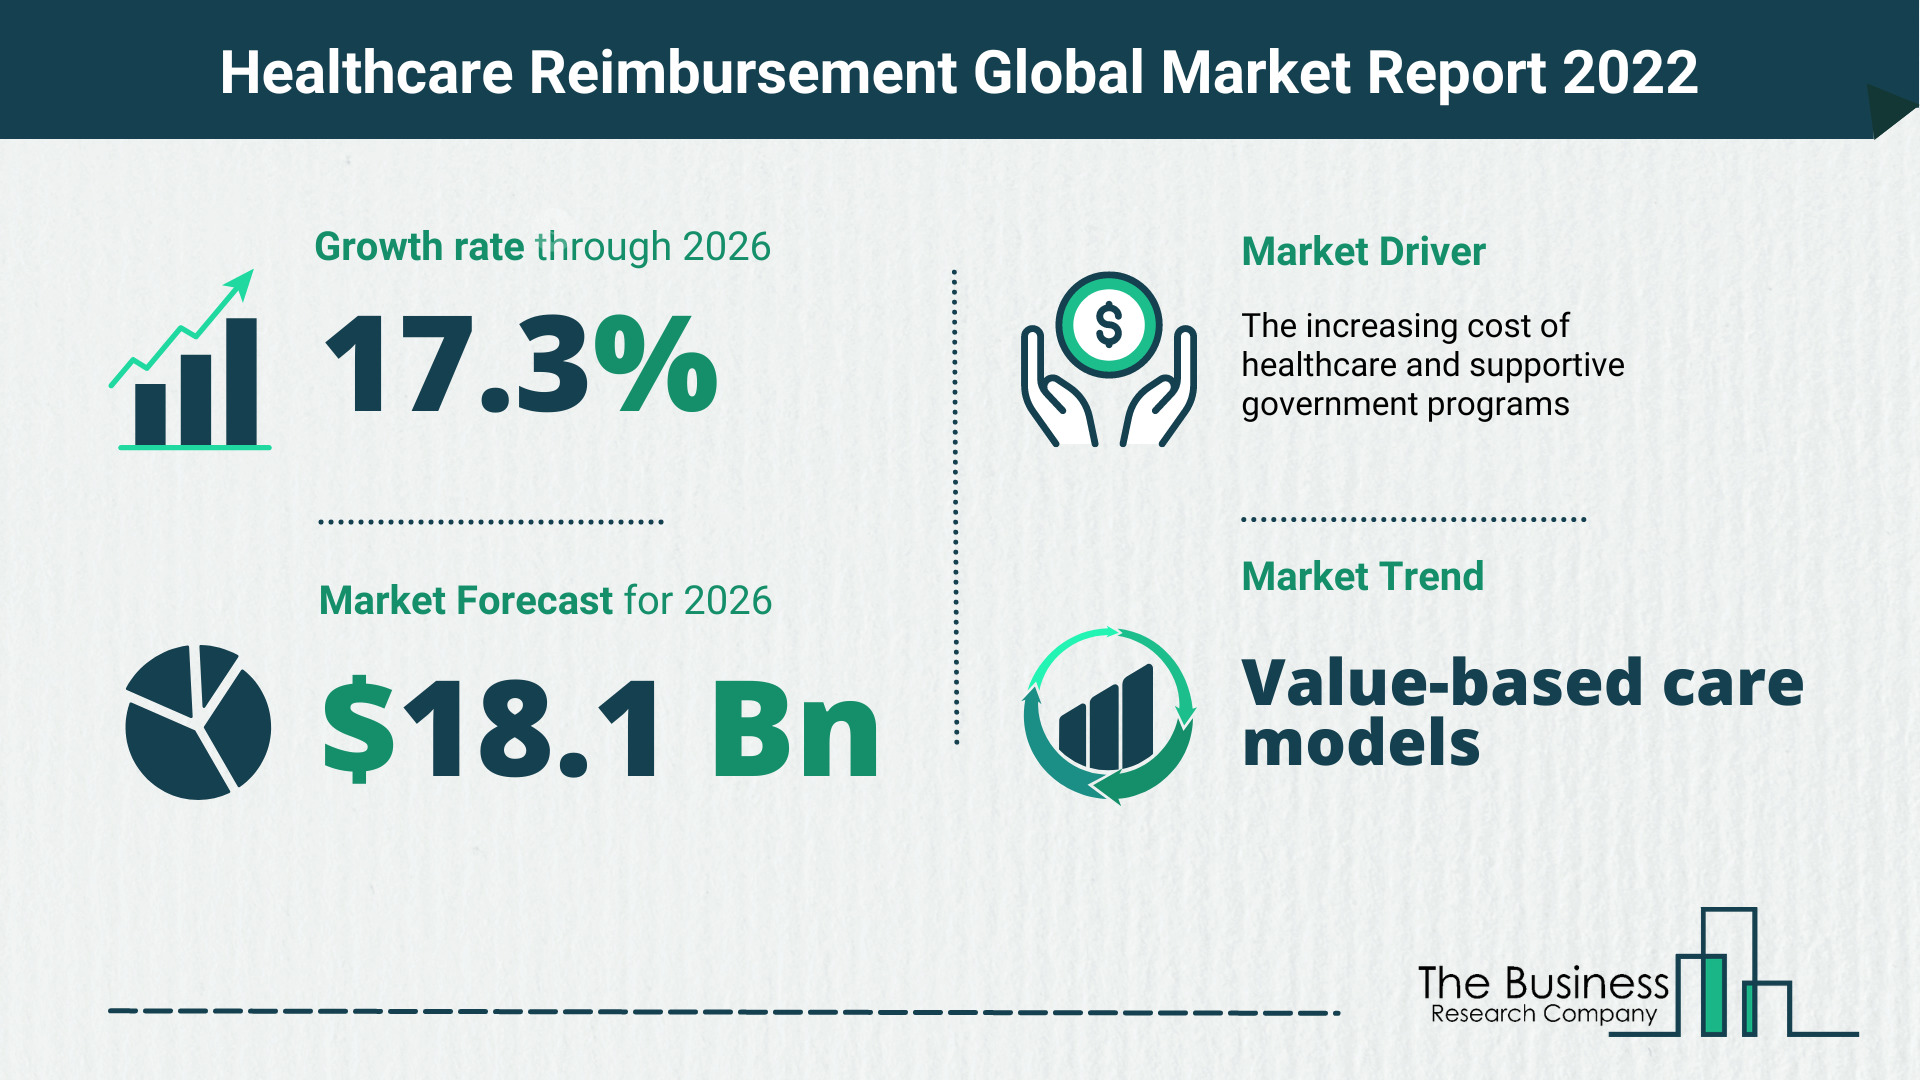 What Is The Healthcare Reimbursement Market Overview In 2022?